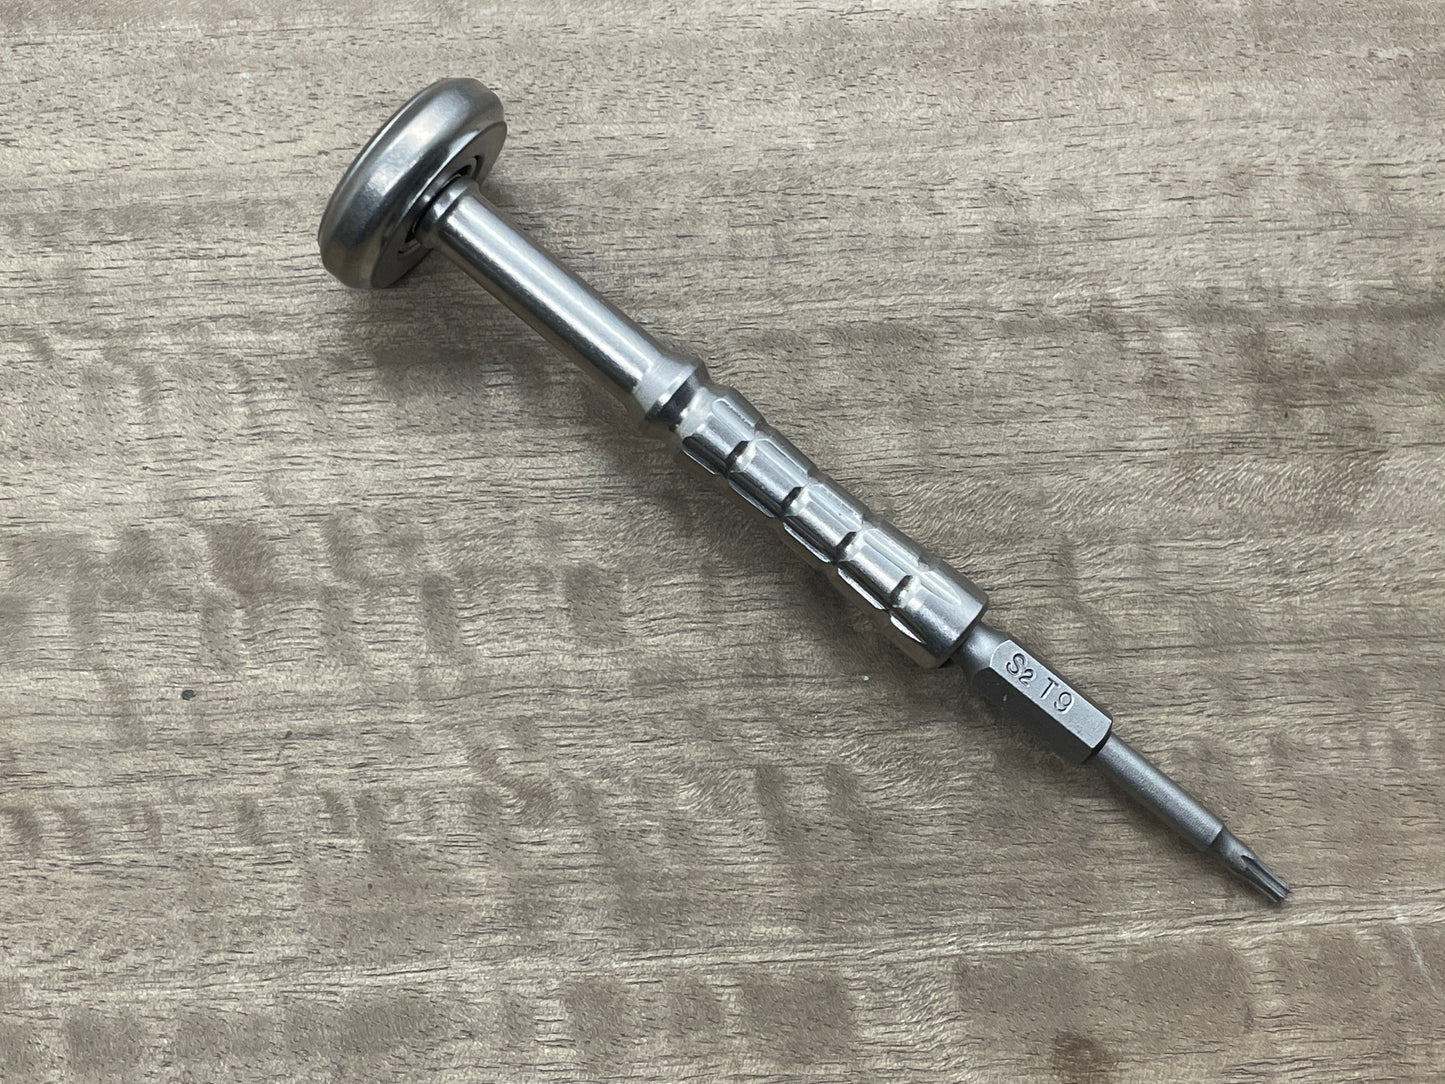 SCREW-BOSS Titanium Tumbled / Stainless Steel Screw Driver